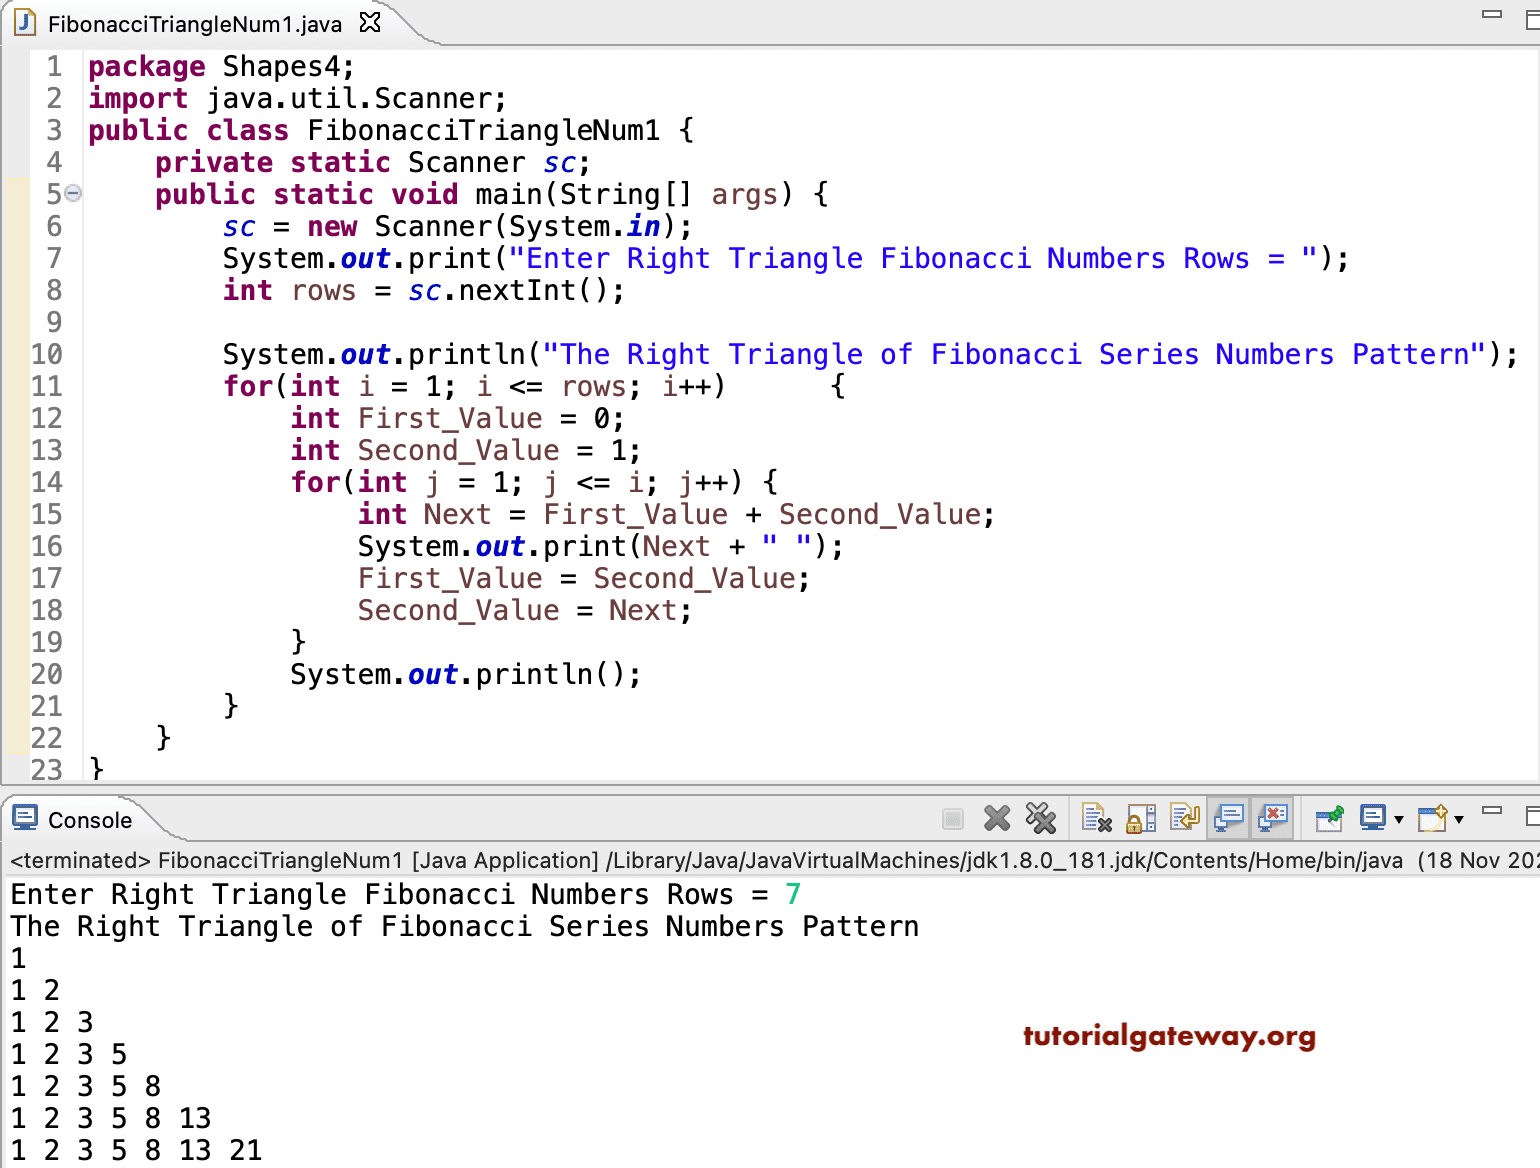 Java Program to Print Right Triangle of Fibonacci Series Numbers Pattern